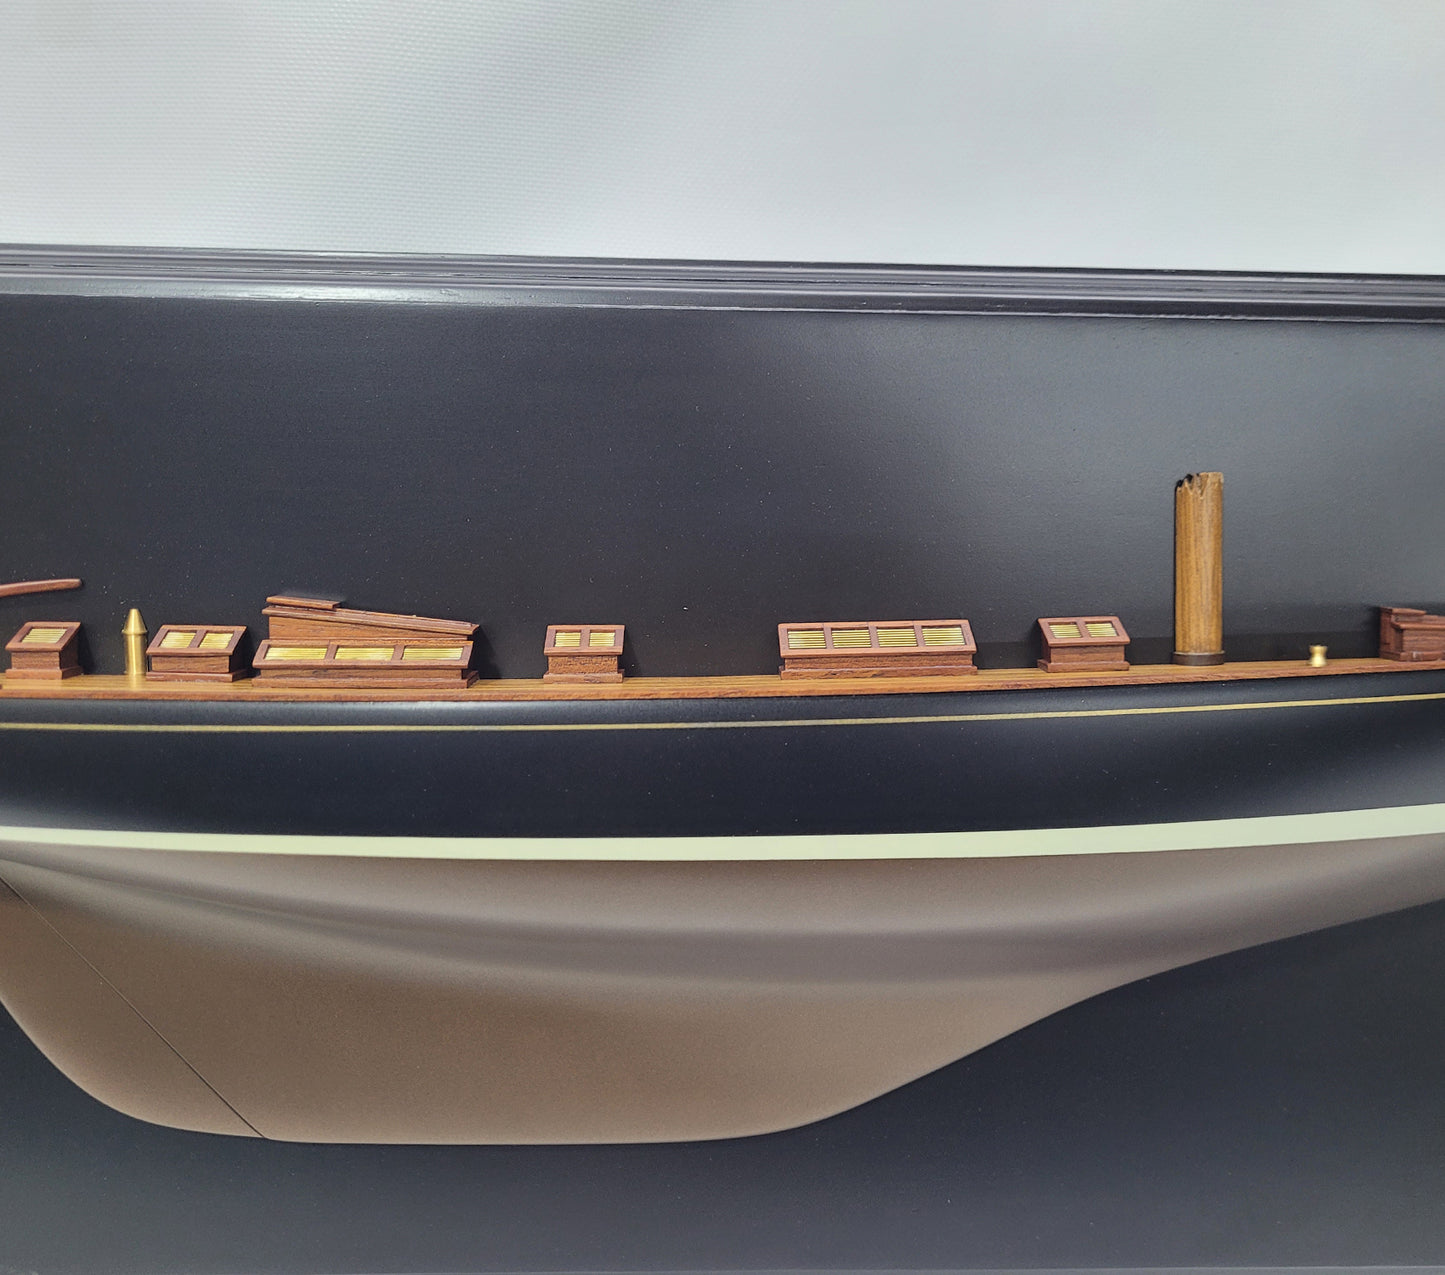 Half Model of the King’s Yacht Britannia - Lannan Gallery